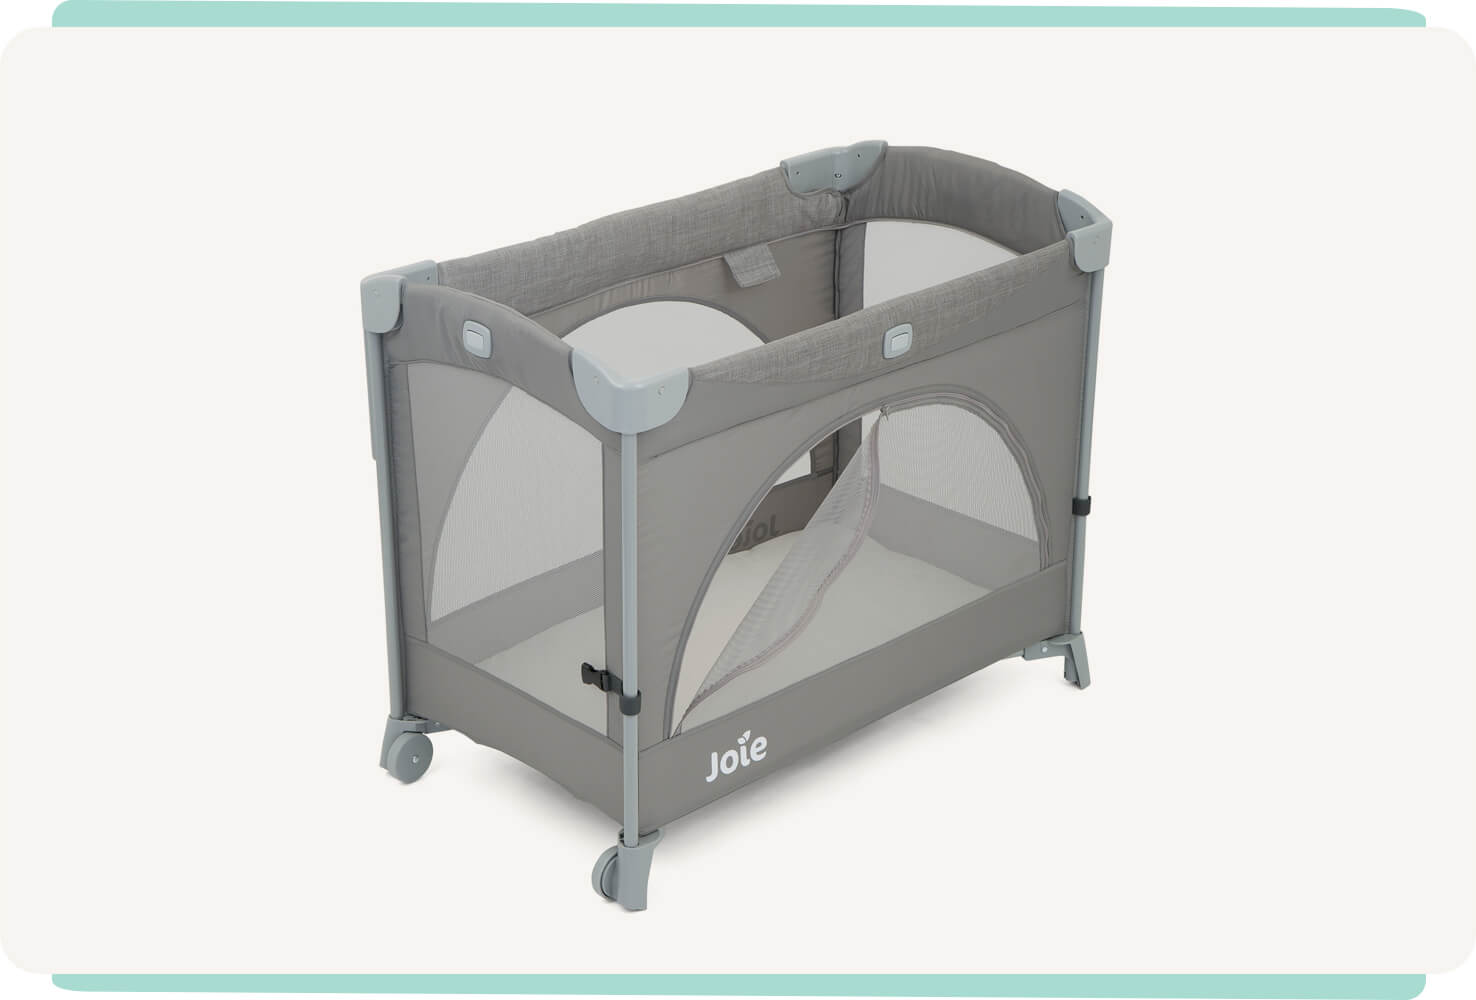 Joie kubbie sleep bedside crib in gray folded multiple angles. 